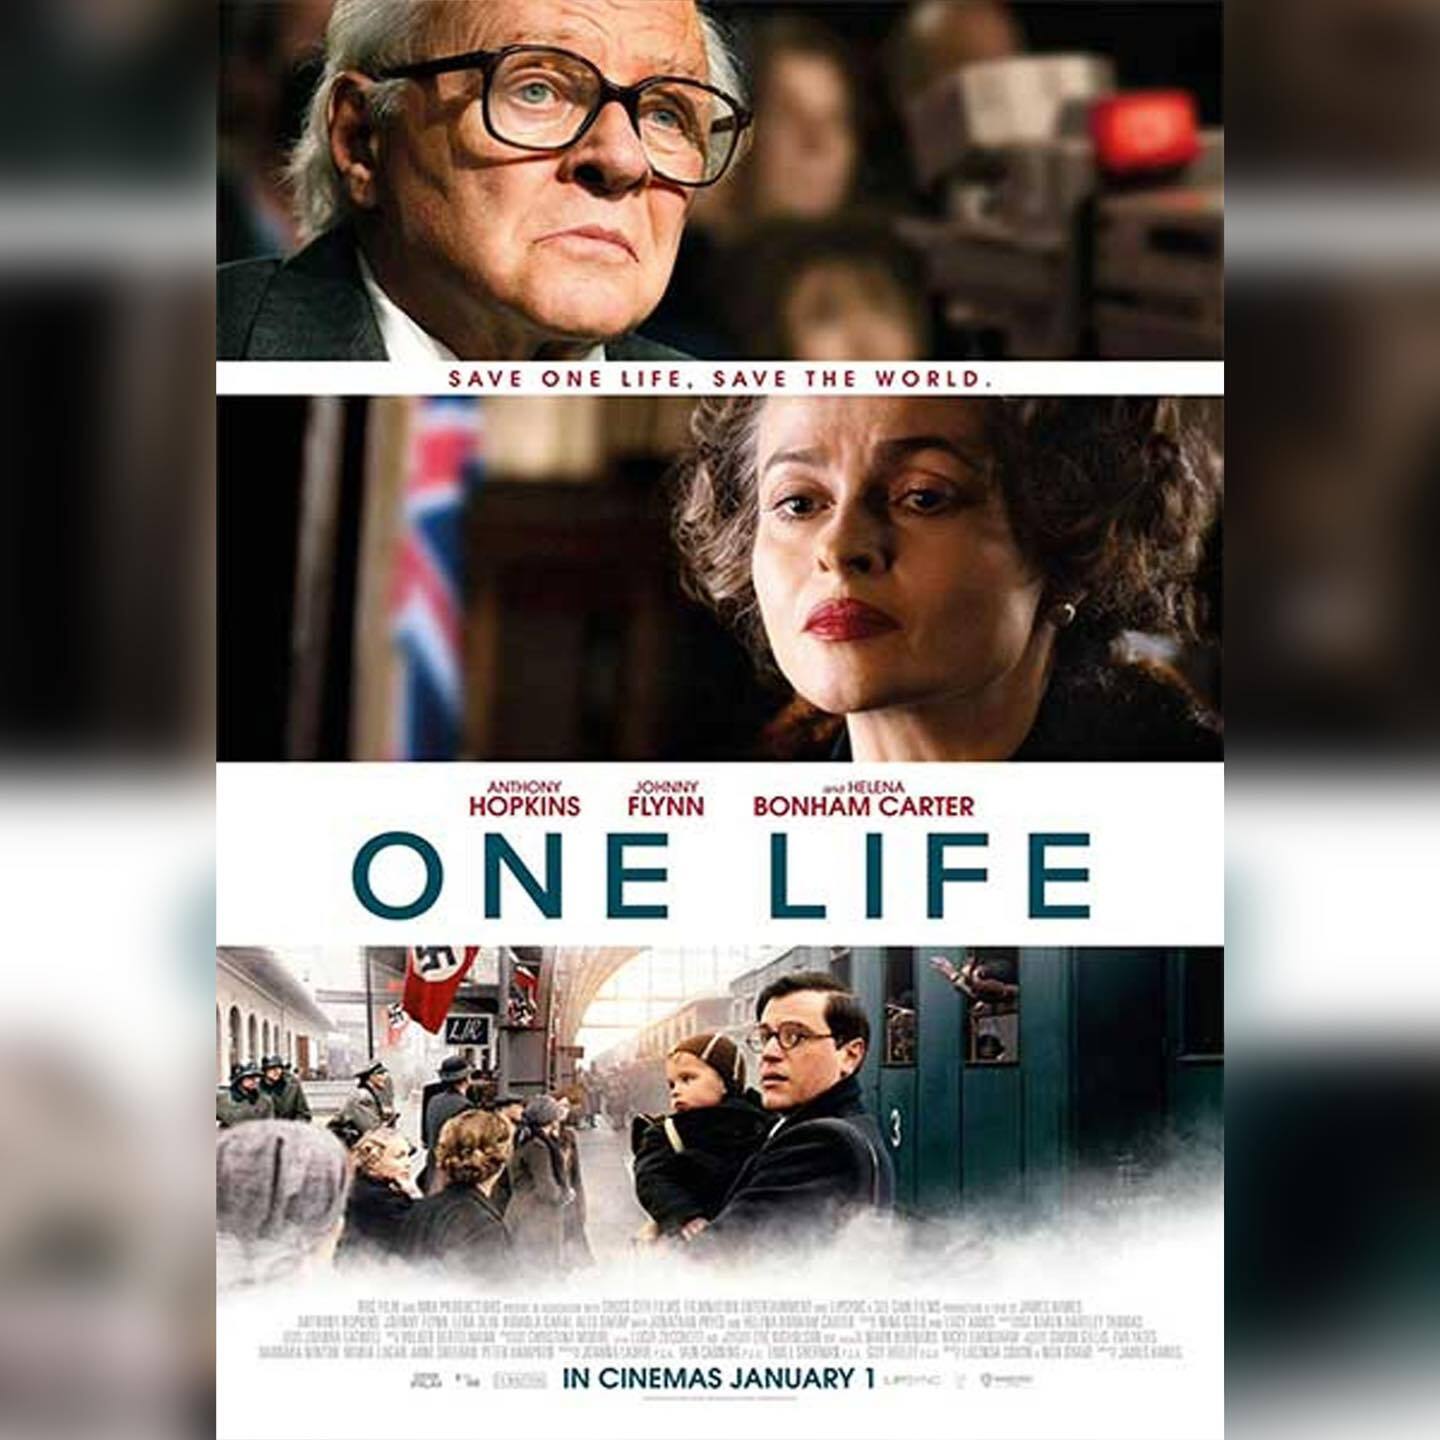 Al cinema Grand'Italia di Traversetolo ONE LIFE Regia: James Hawes  con Anthony Hopkins, Helena Bonham Carter, Johnny Flynn